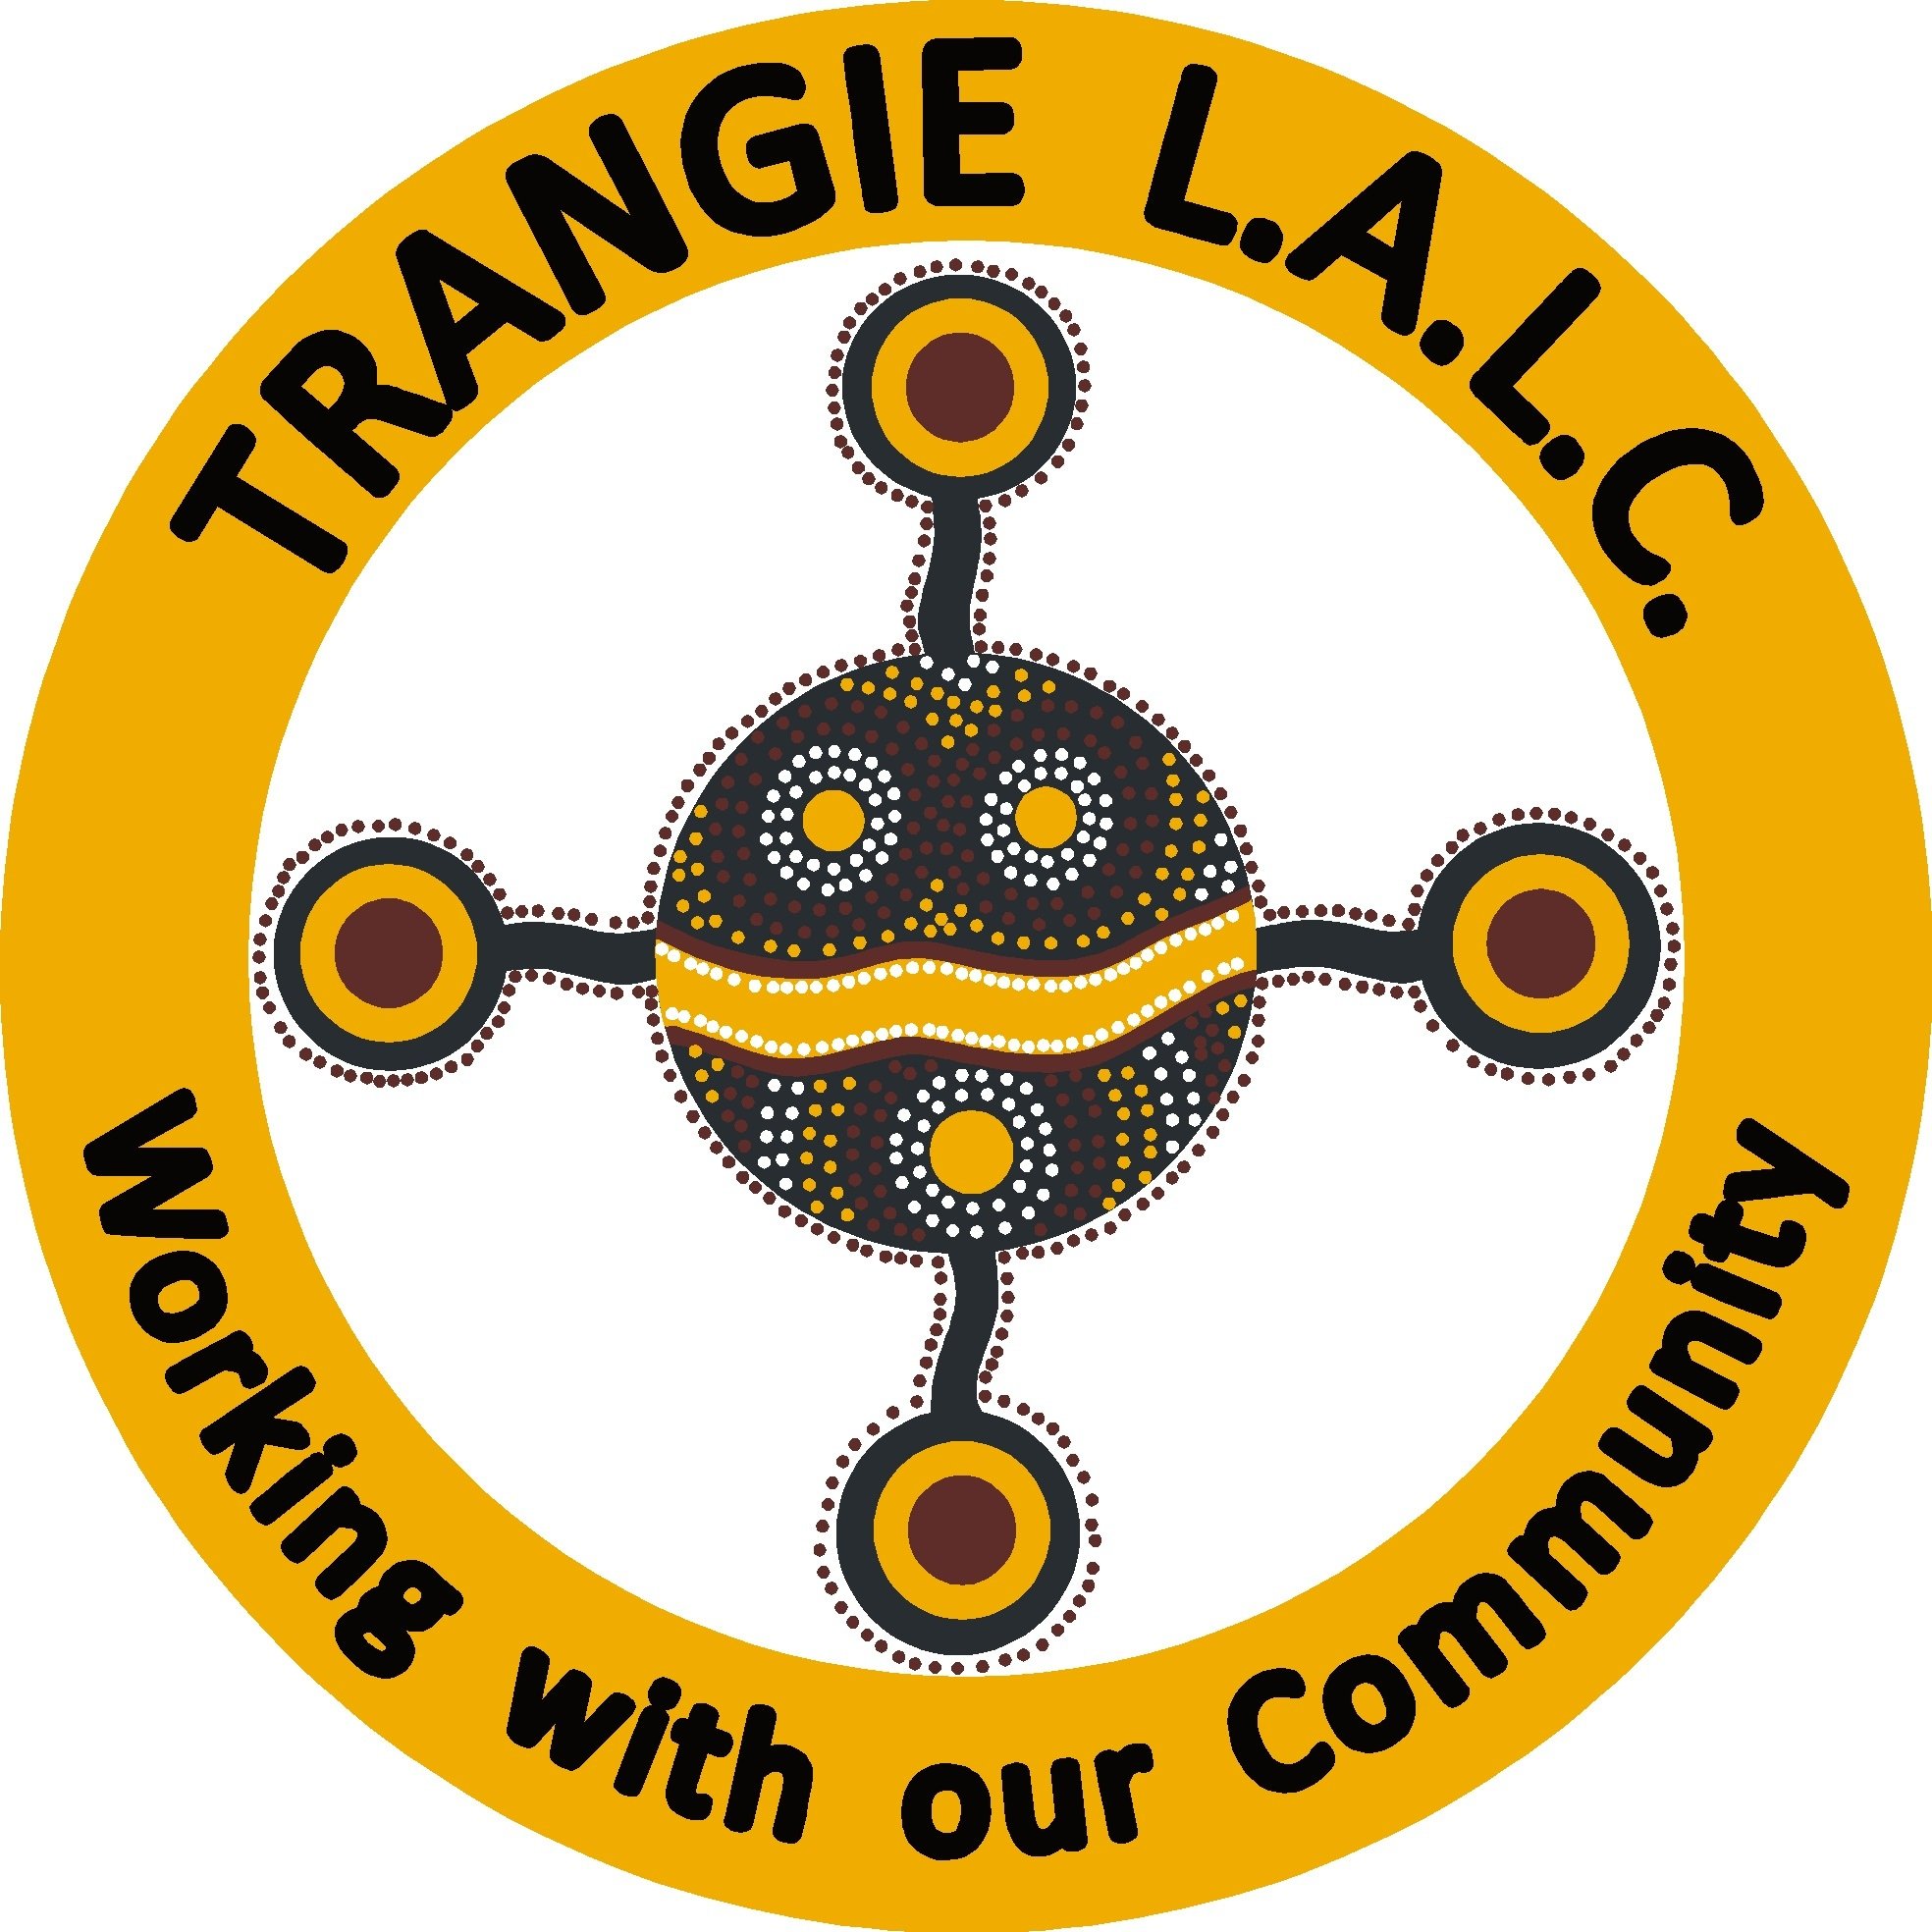 Trangie Local Aboriginal Land Council &amp; Wungunja Cultural Centre